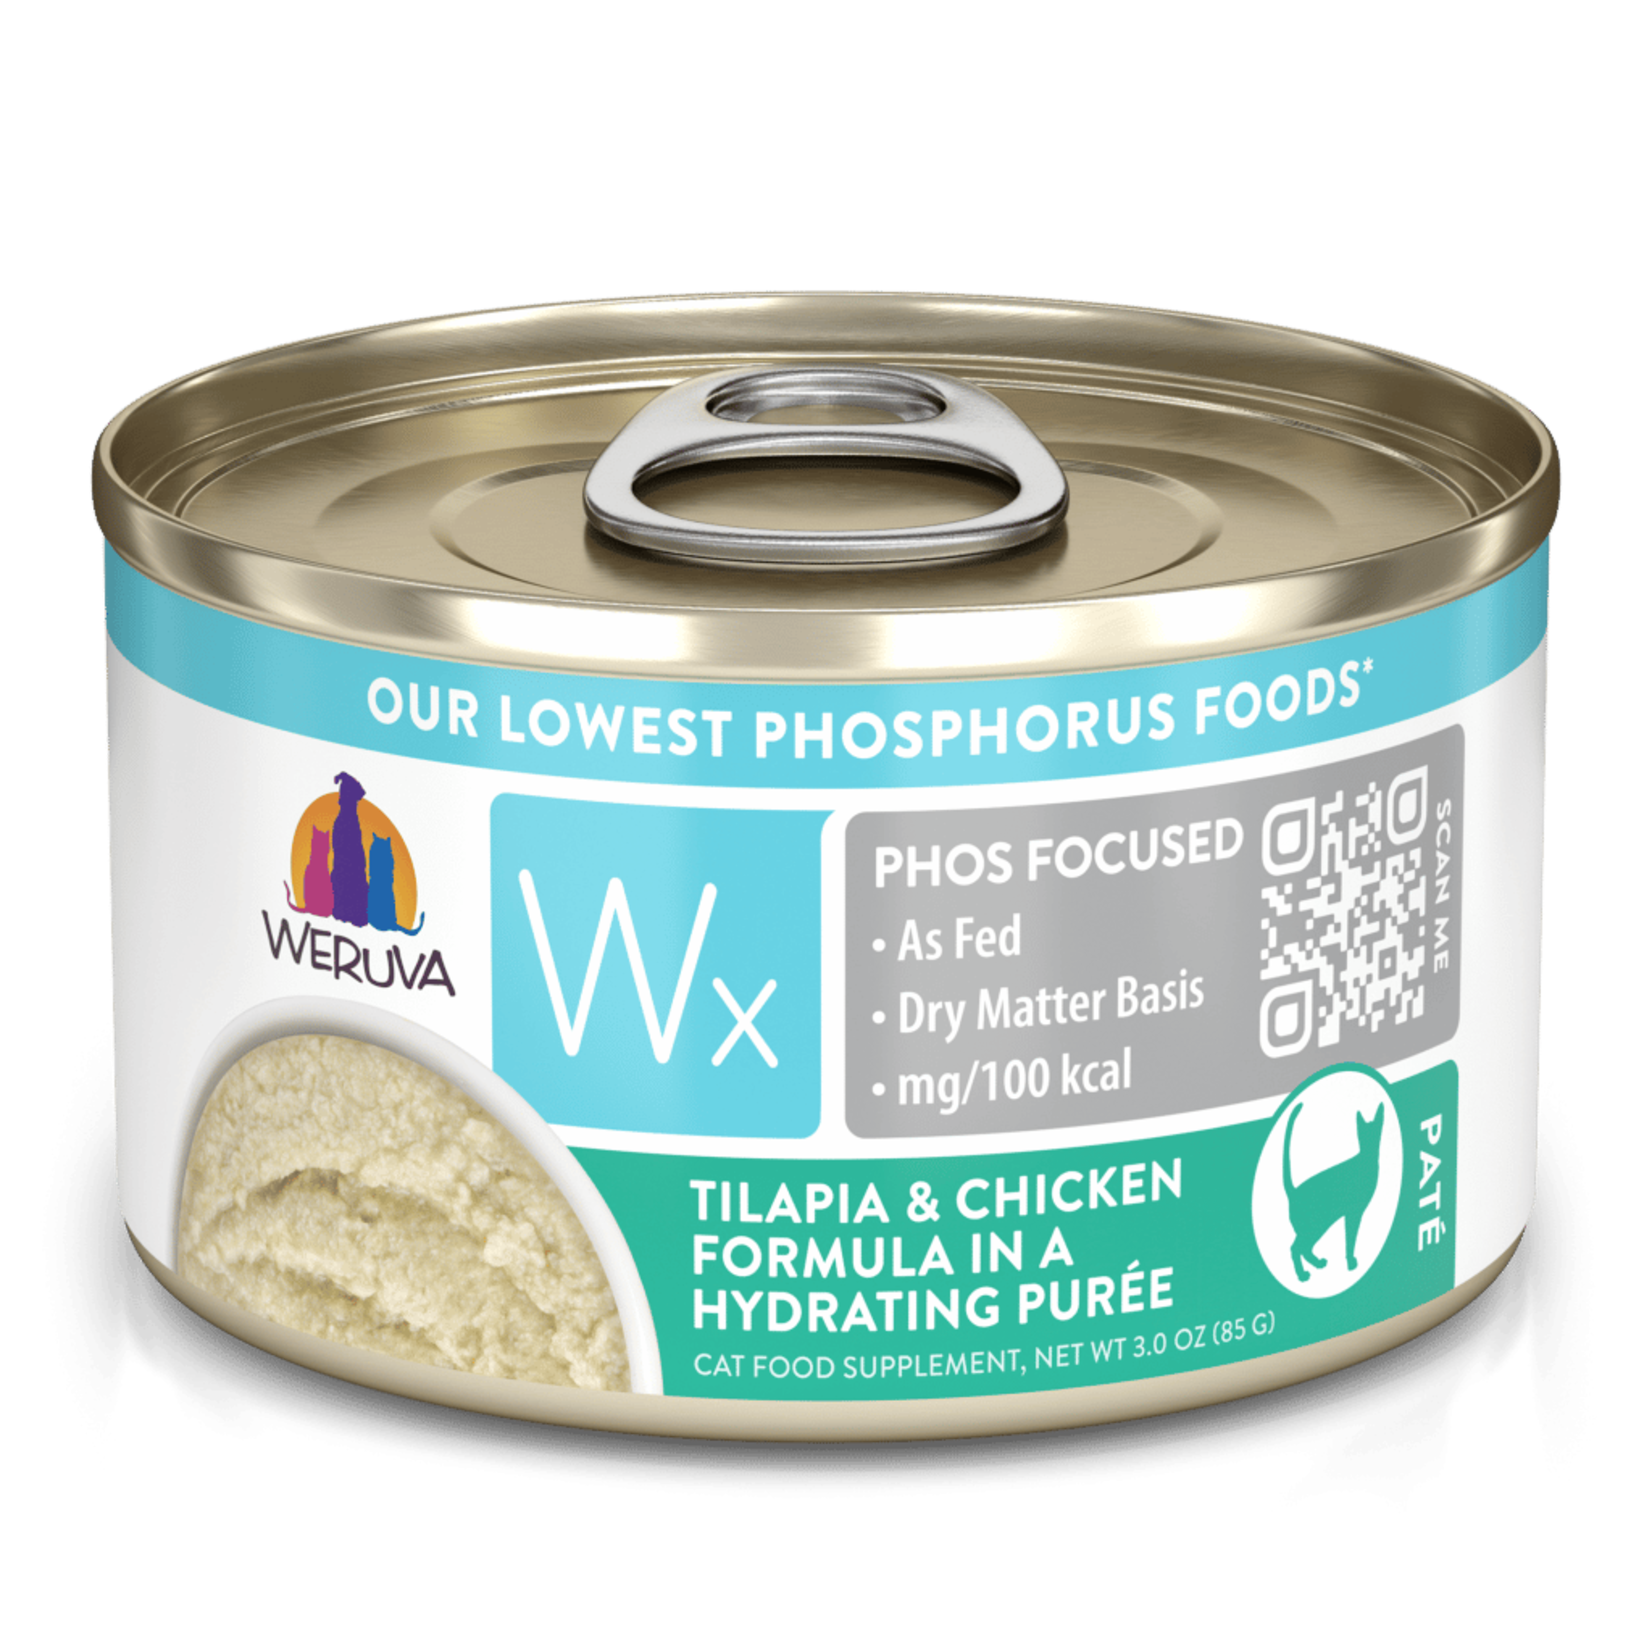 Weruva Wx Phos Focused Tilapia & Chicken Formula in a Hydrating Puree